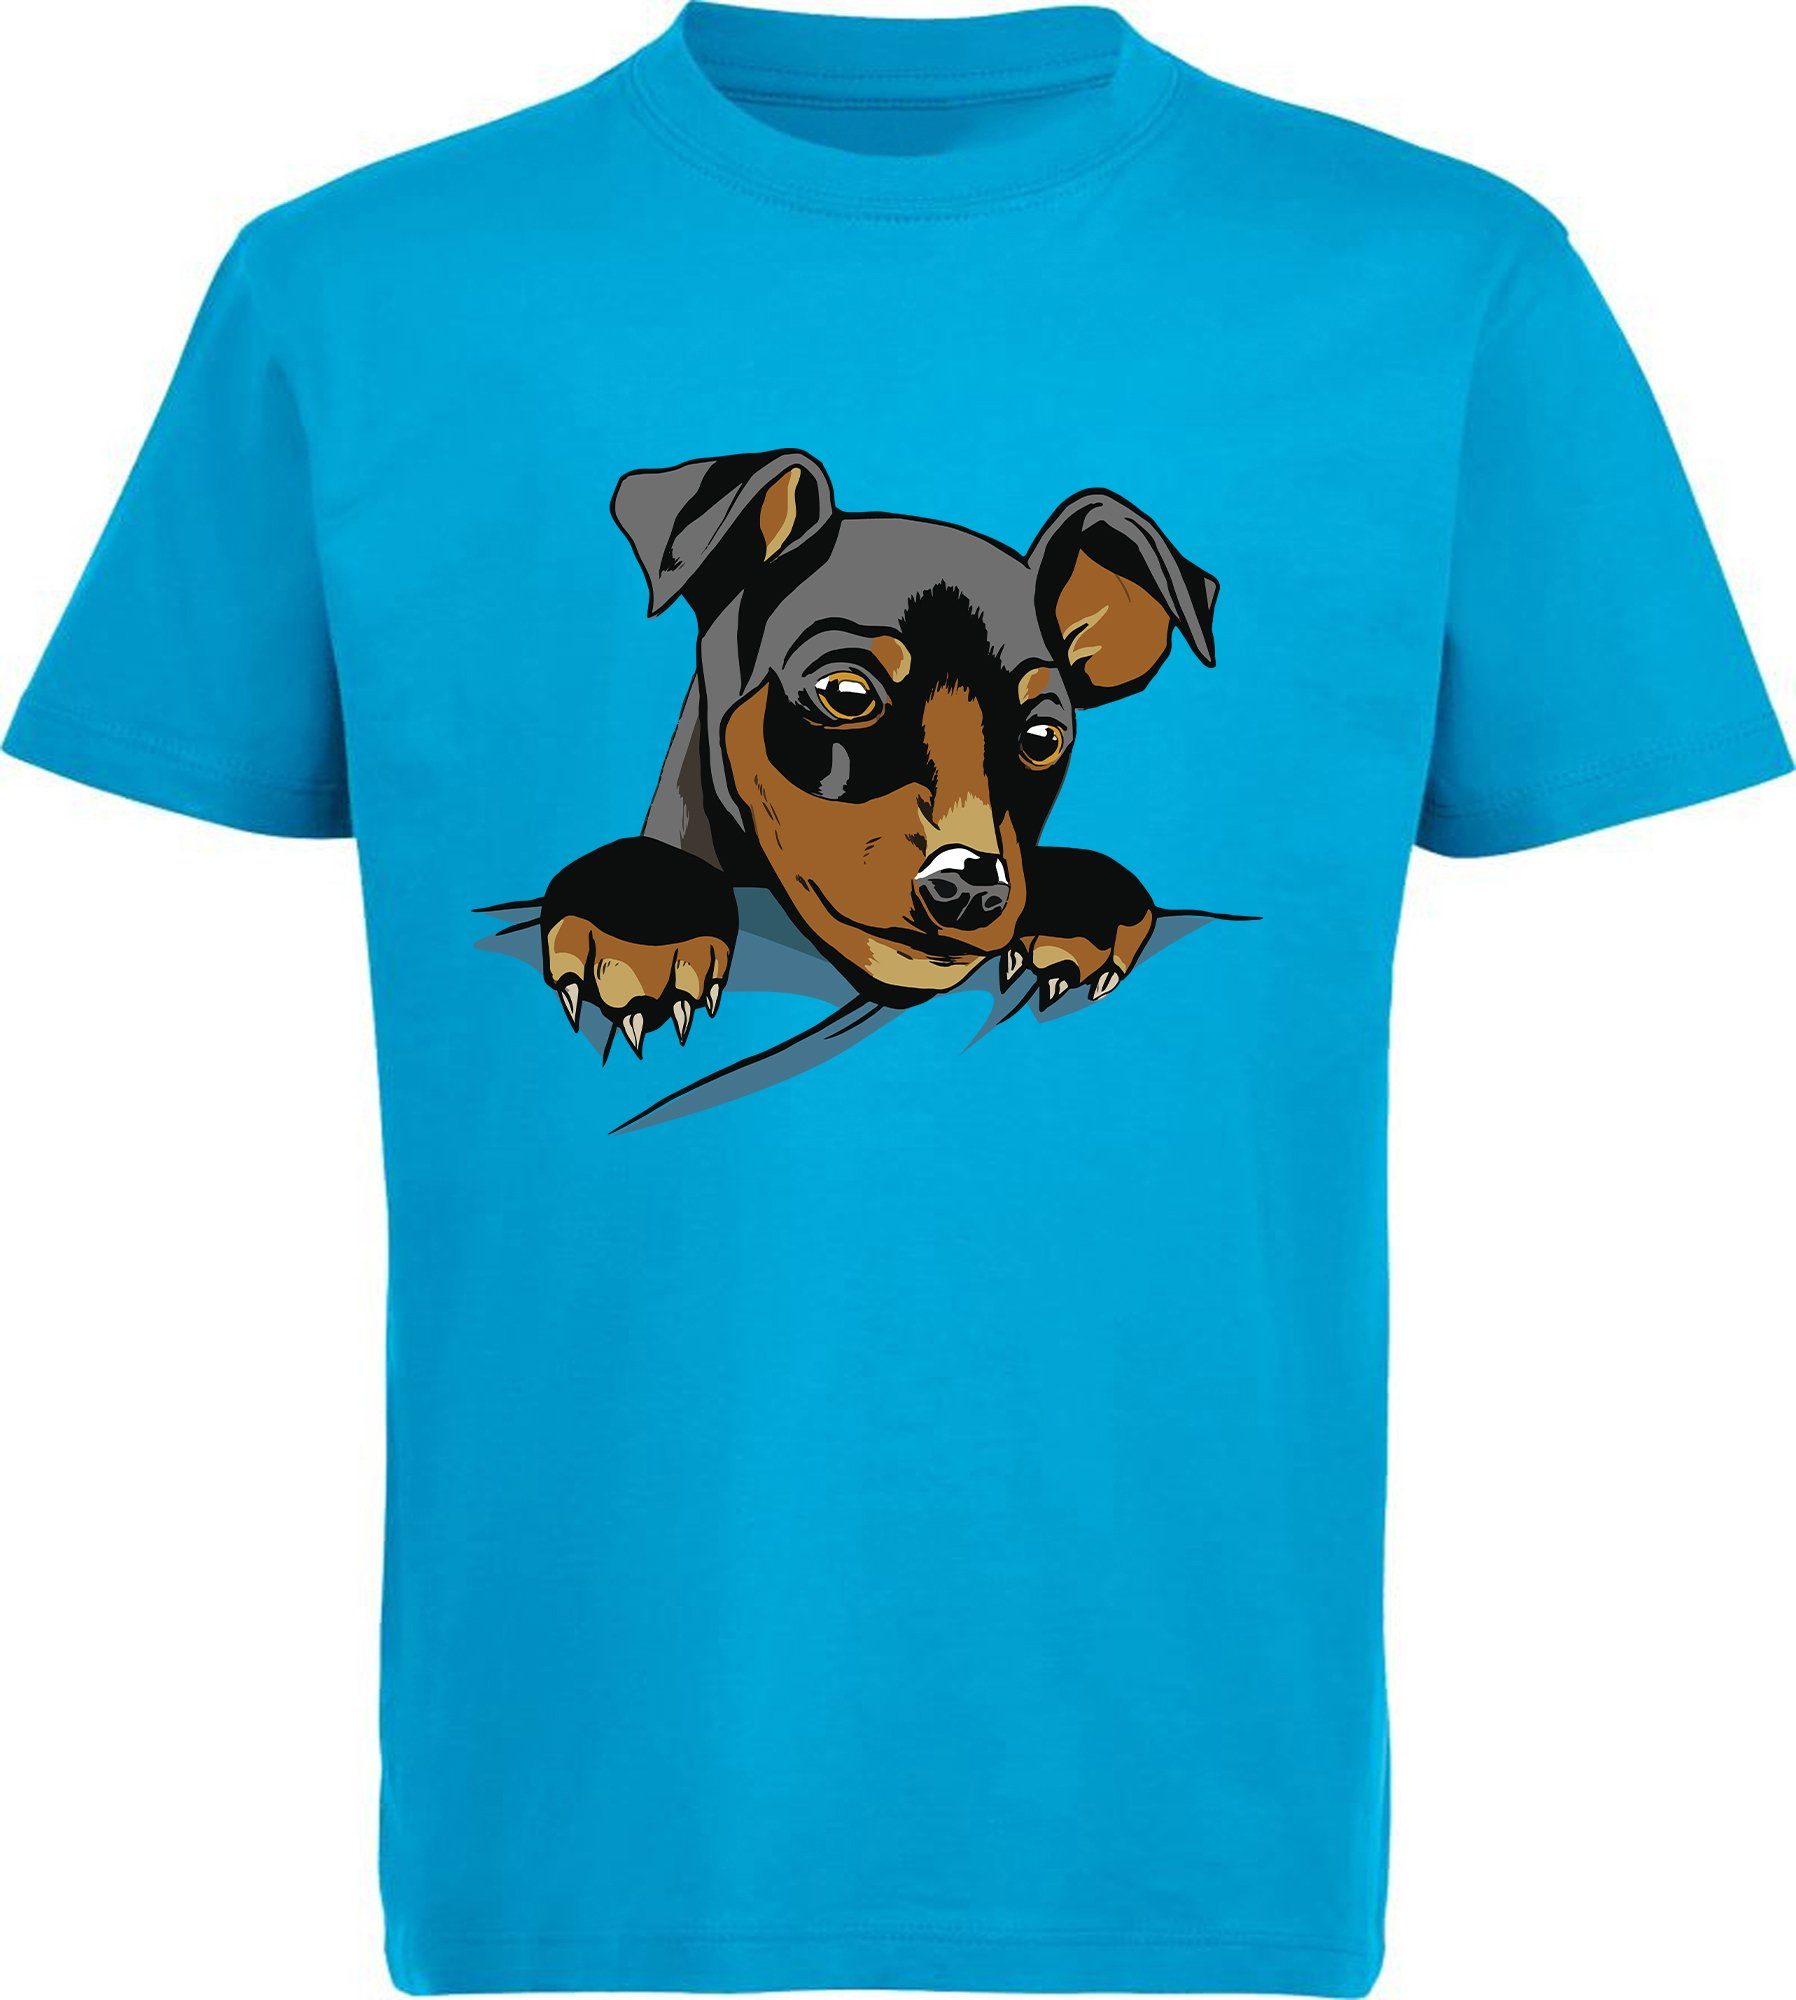 MyDesign24 Print-Shirt bedrucktes Kinder Hunde T-Shirt - Süßer Welpe Baumwollshirt mit Aufdruck, i227 aqua blau